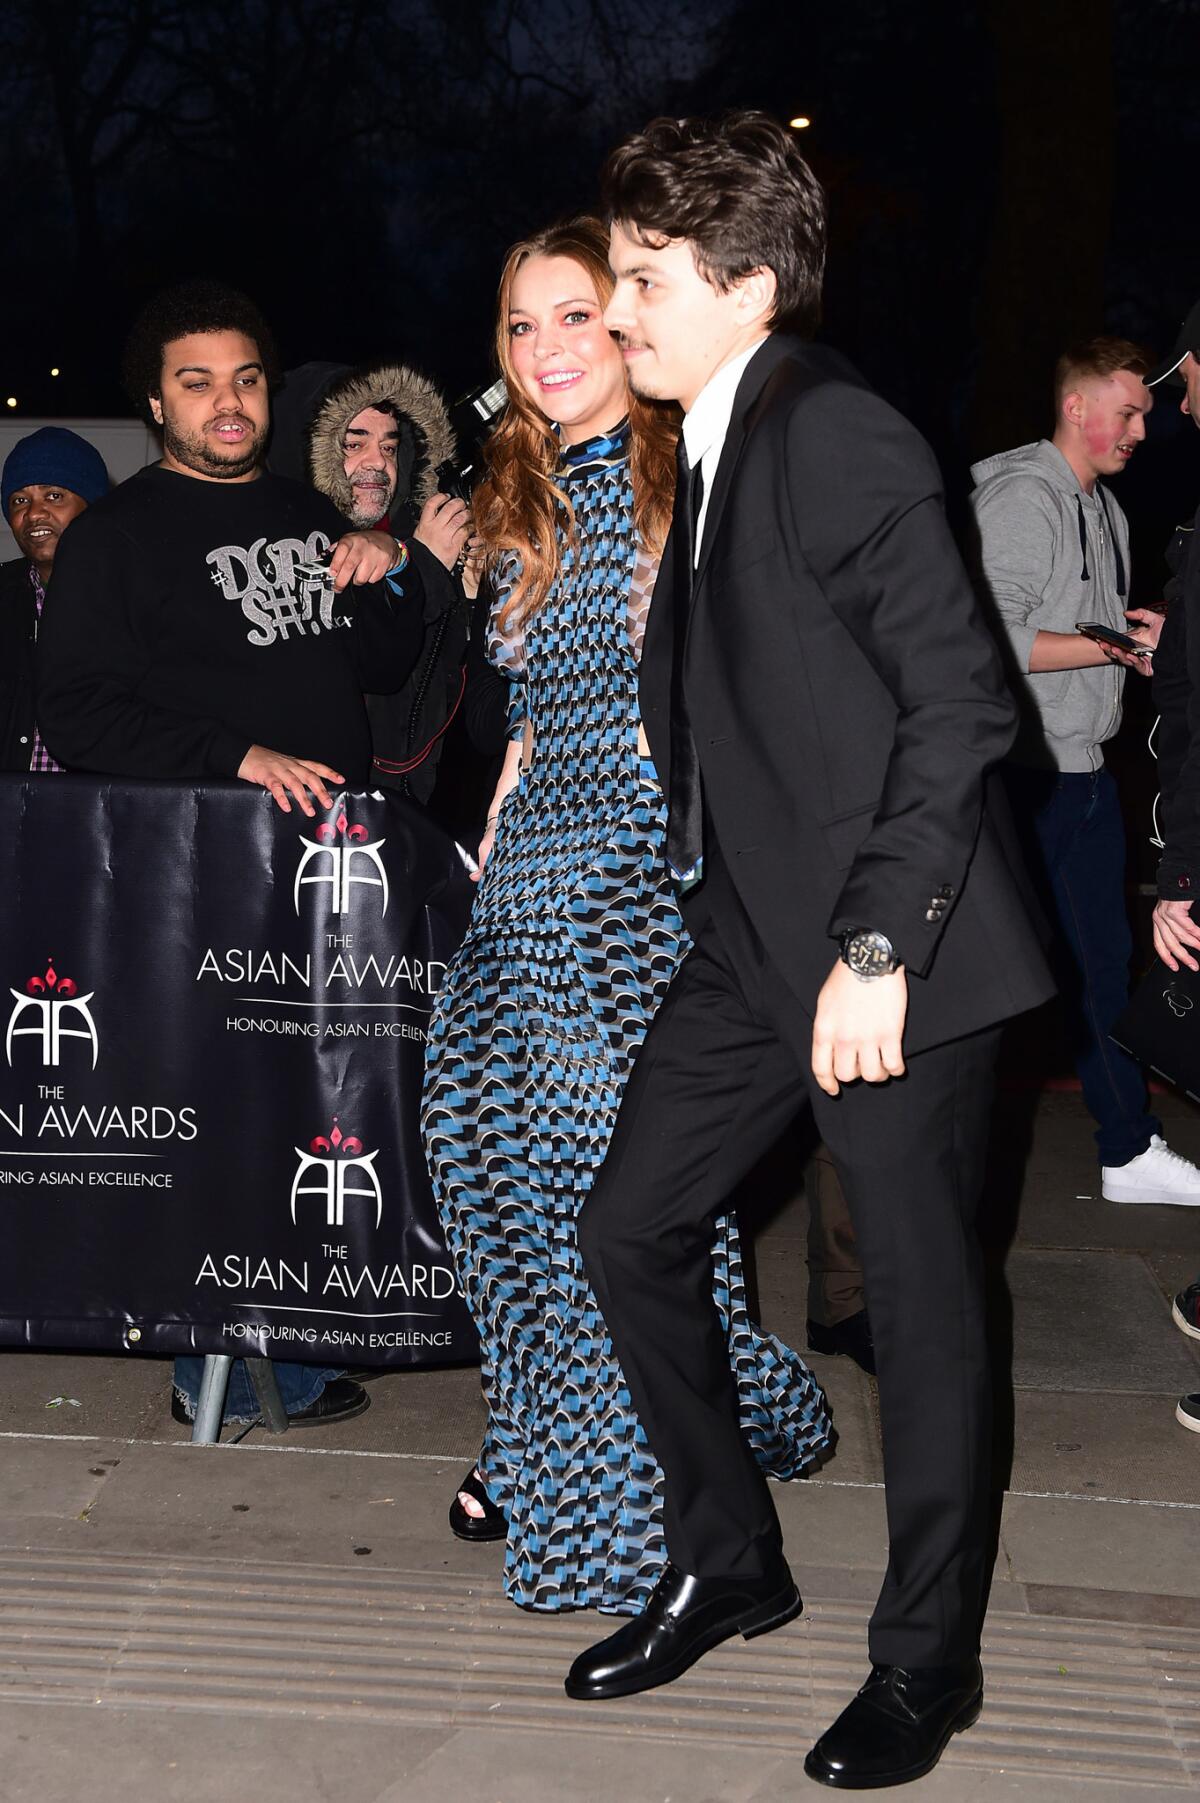 Lindsay Lohan and Egor Tarabasov arrive at the 2016 British Asian Awards in London on April 8.